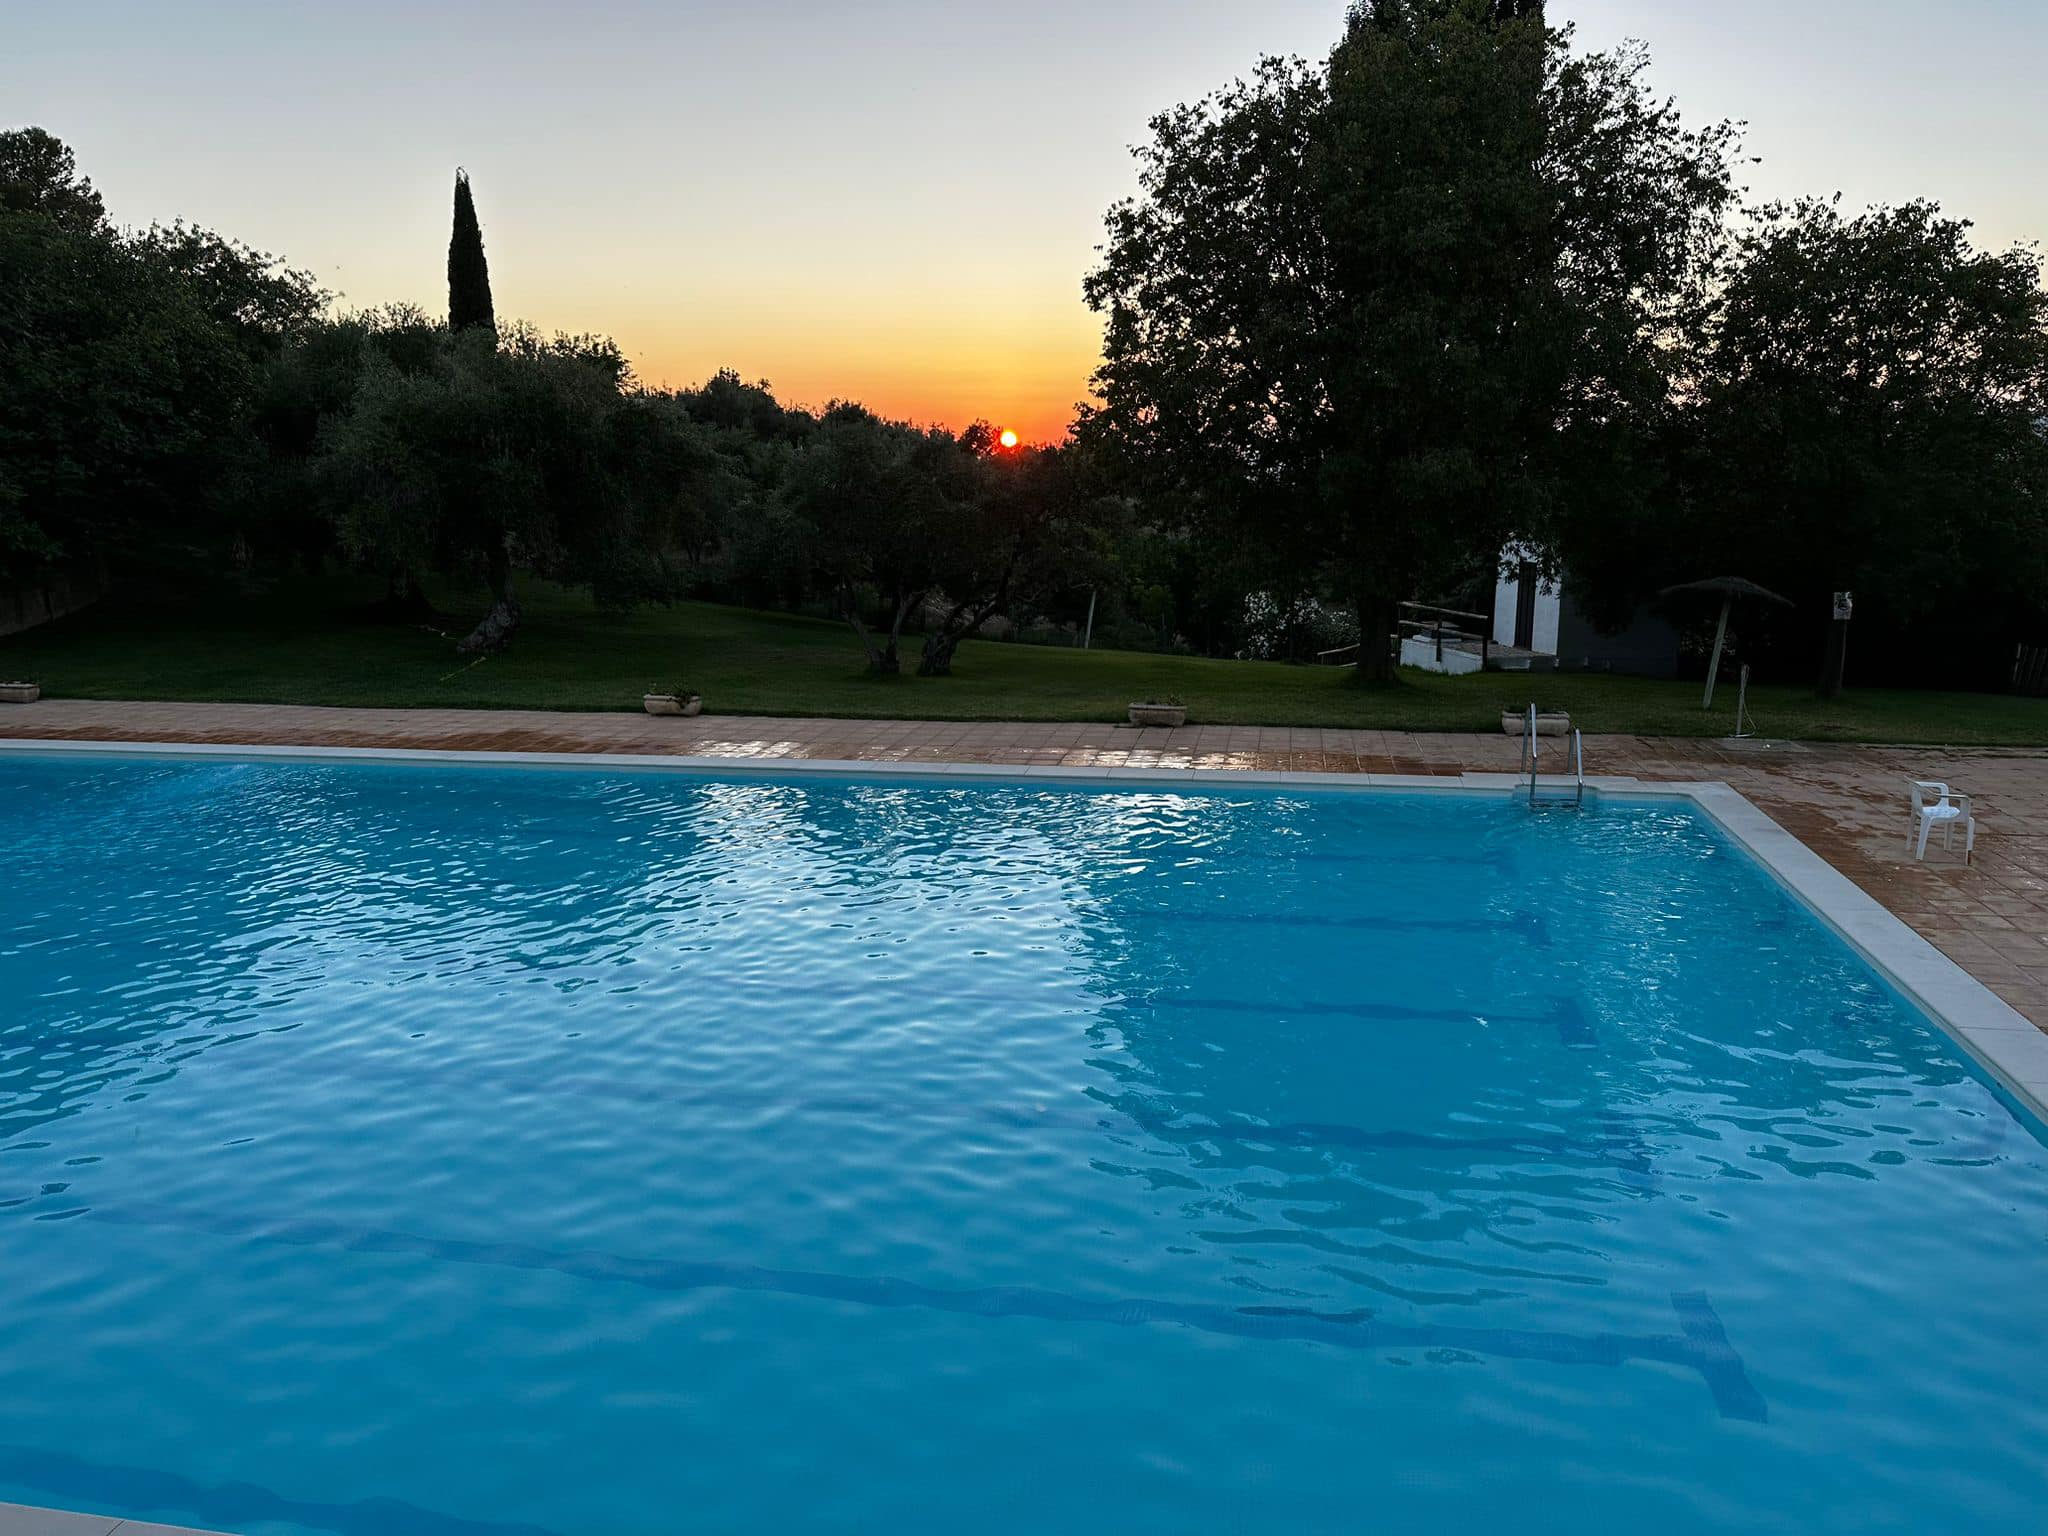 La piscina municipal de Zahara de la Sierra abre hasta medianoche.